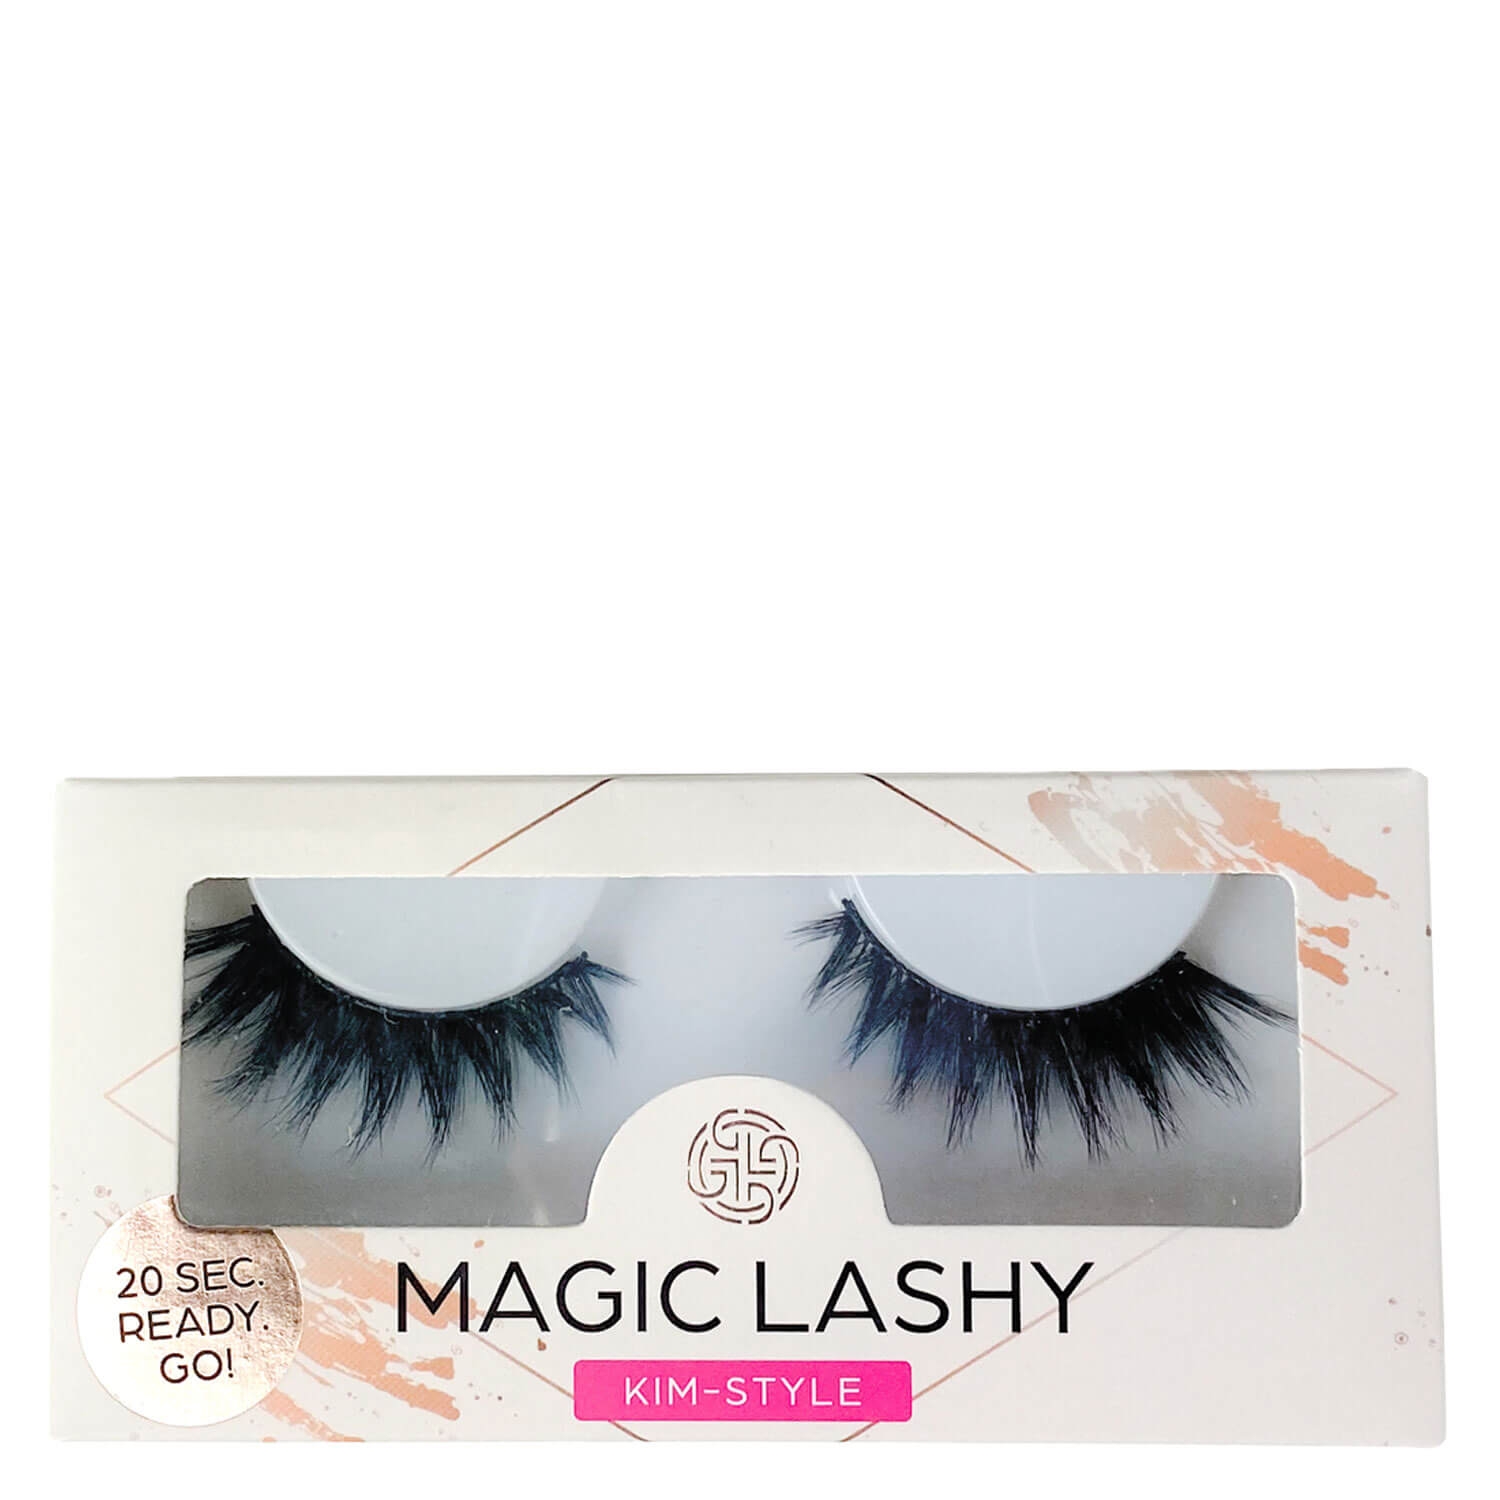 Product image from GL Beautycompany - Magic Lashy Kim-Style